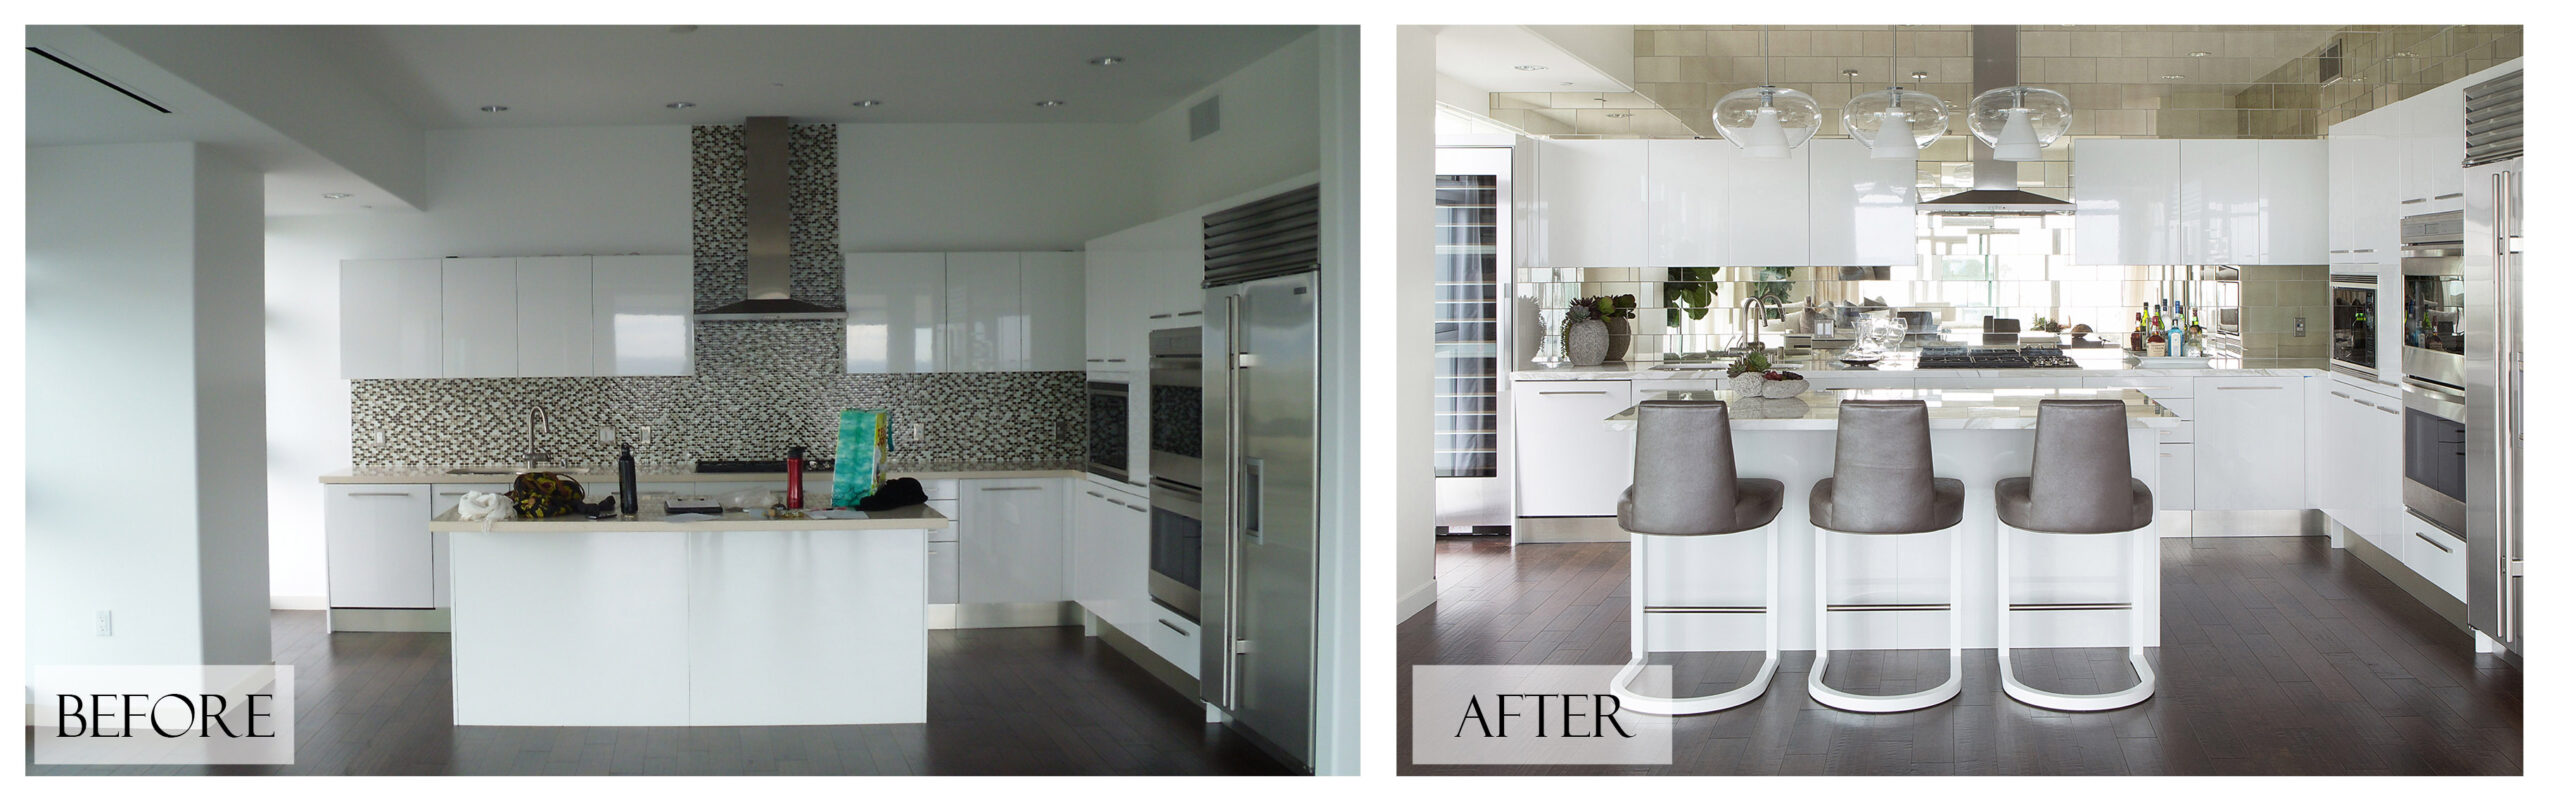 Top San Diego Interior Designer Lori Dennis Inc Before and After Kitchen